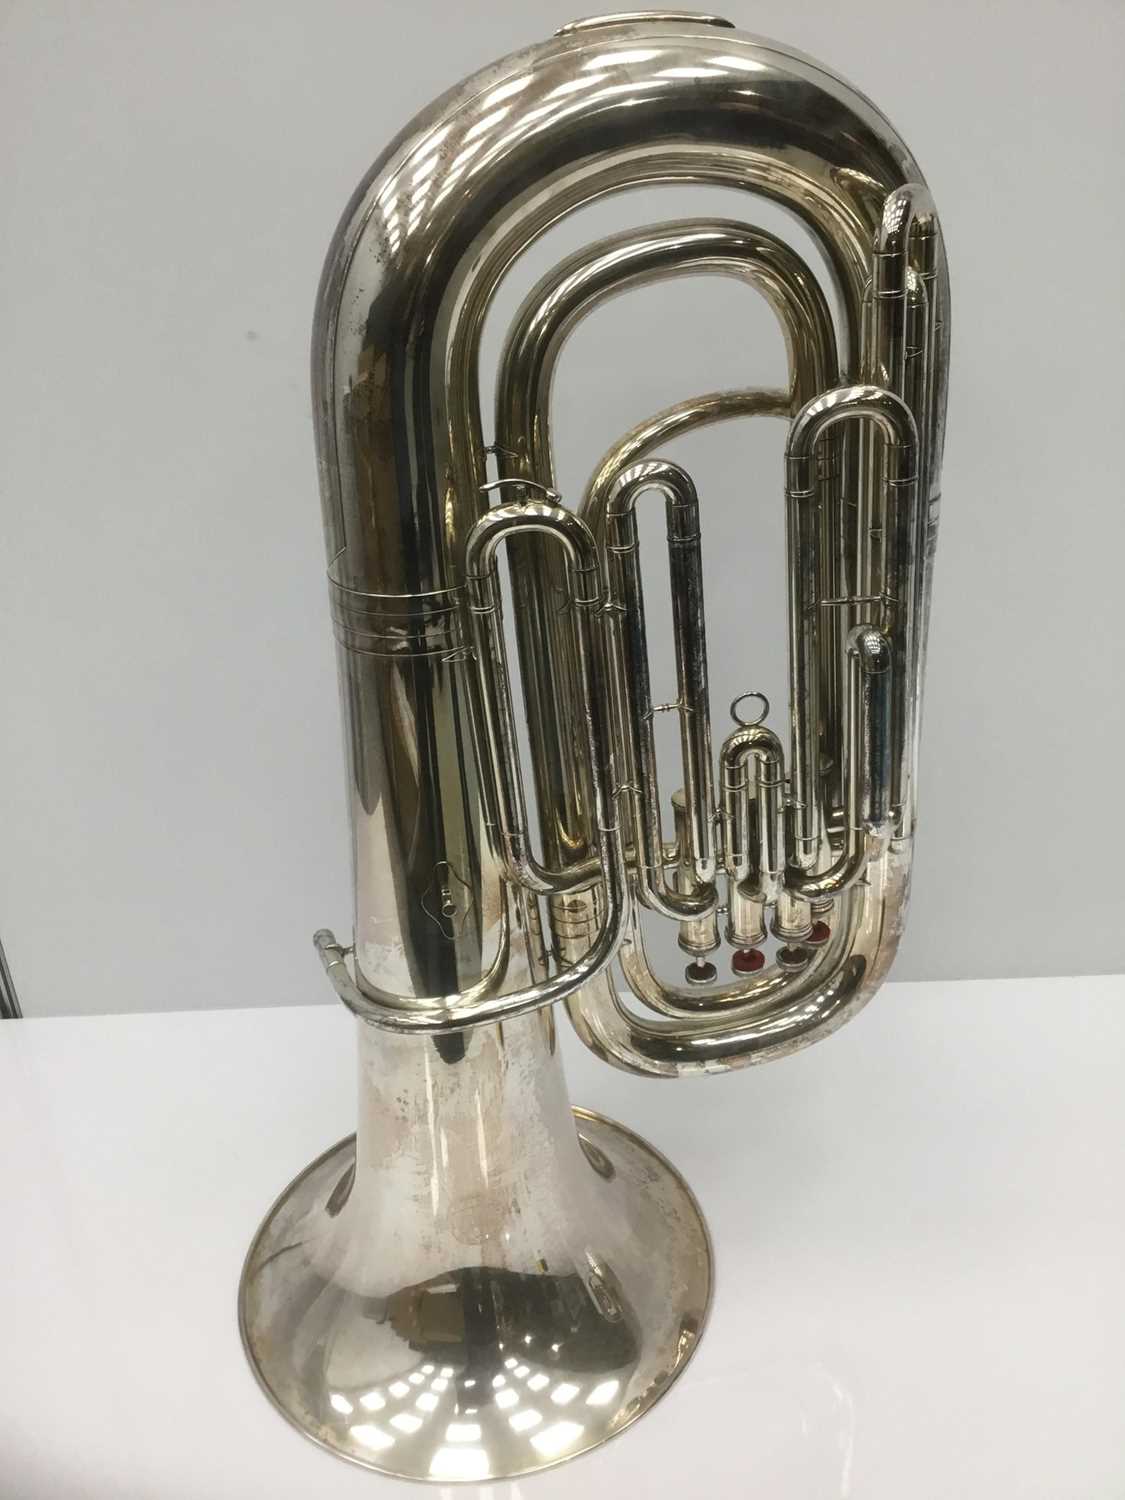 Weltklang silvered Bb four-valve tuba, 94cm high